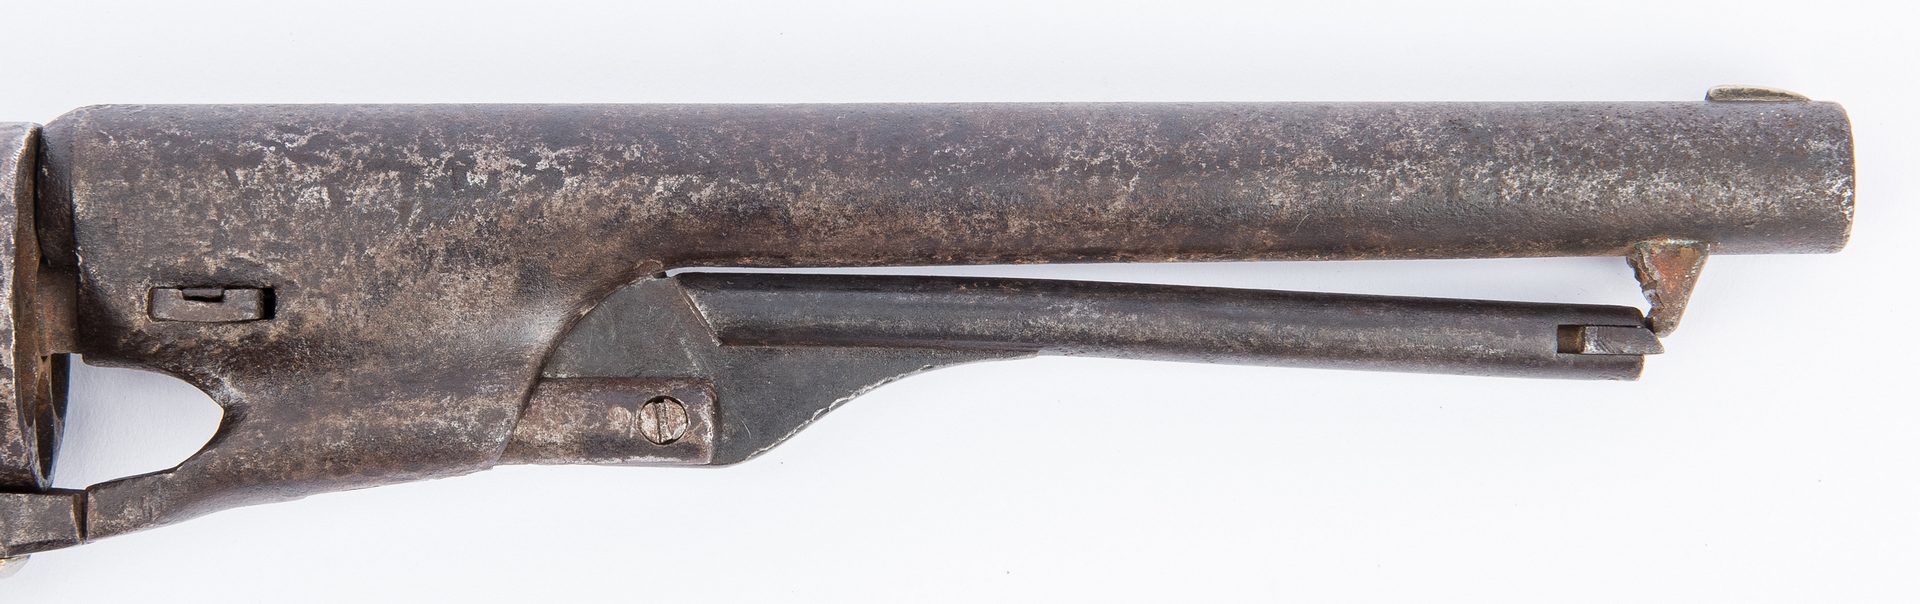 Lot 372: 2 Early 1860's Colt Firearms